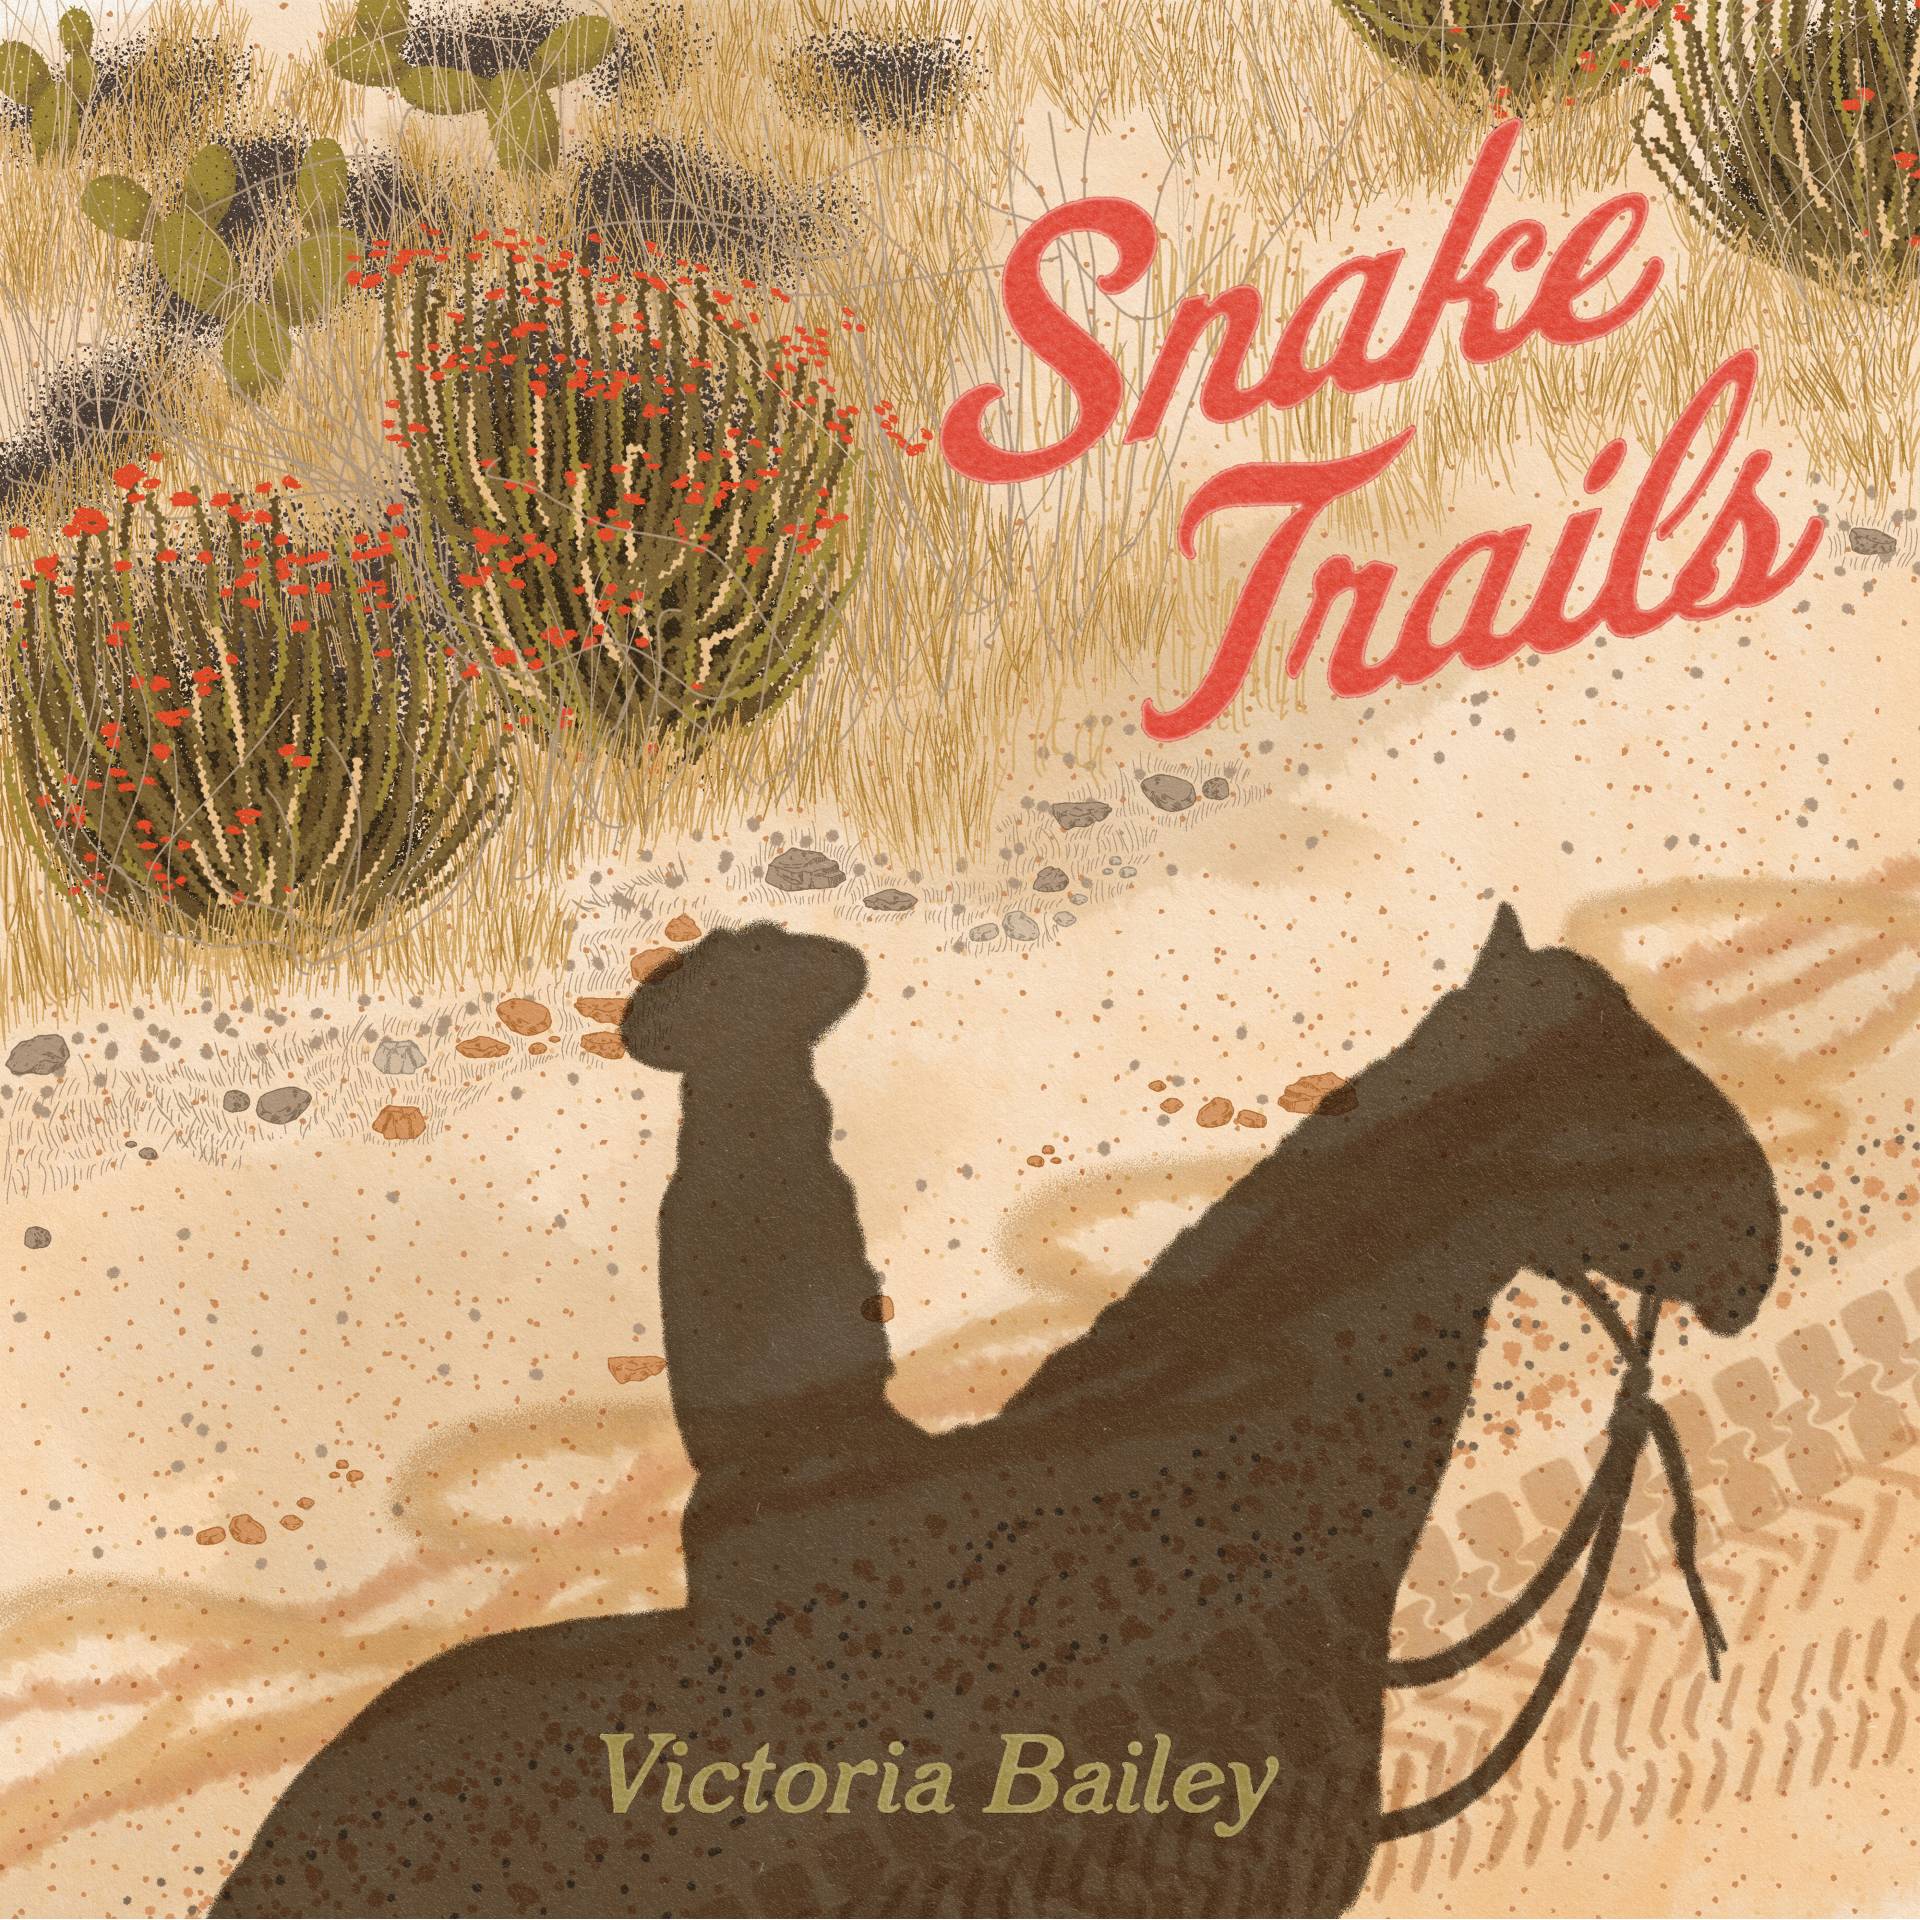 Victoria Bailey “Snake Trails” single artwork